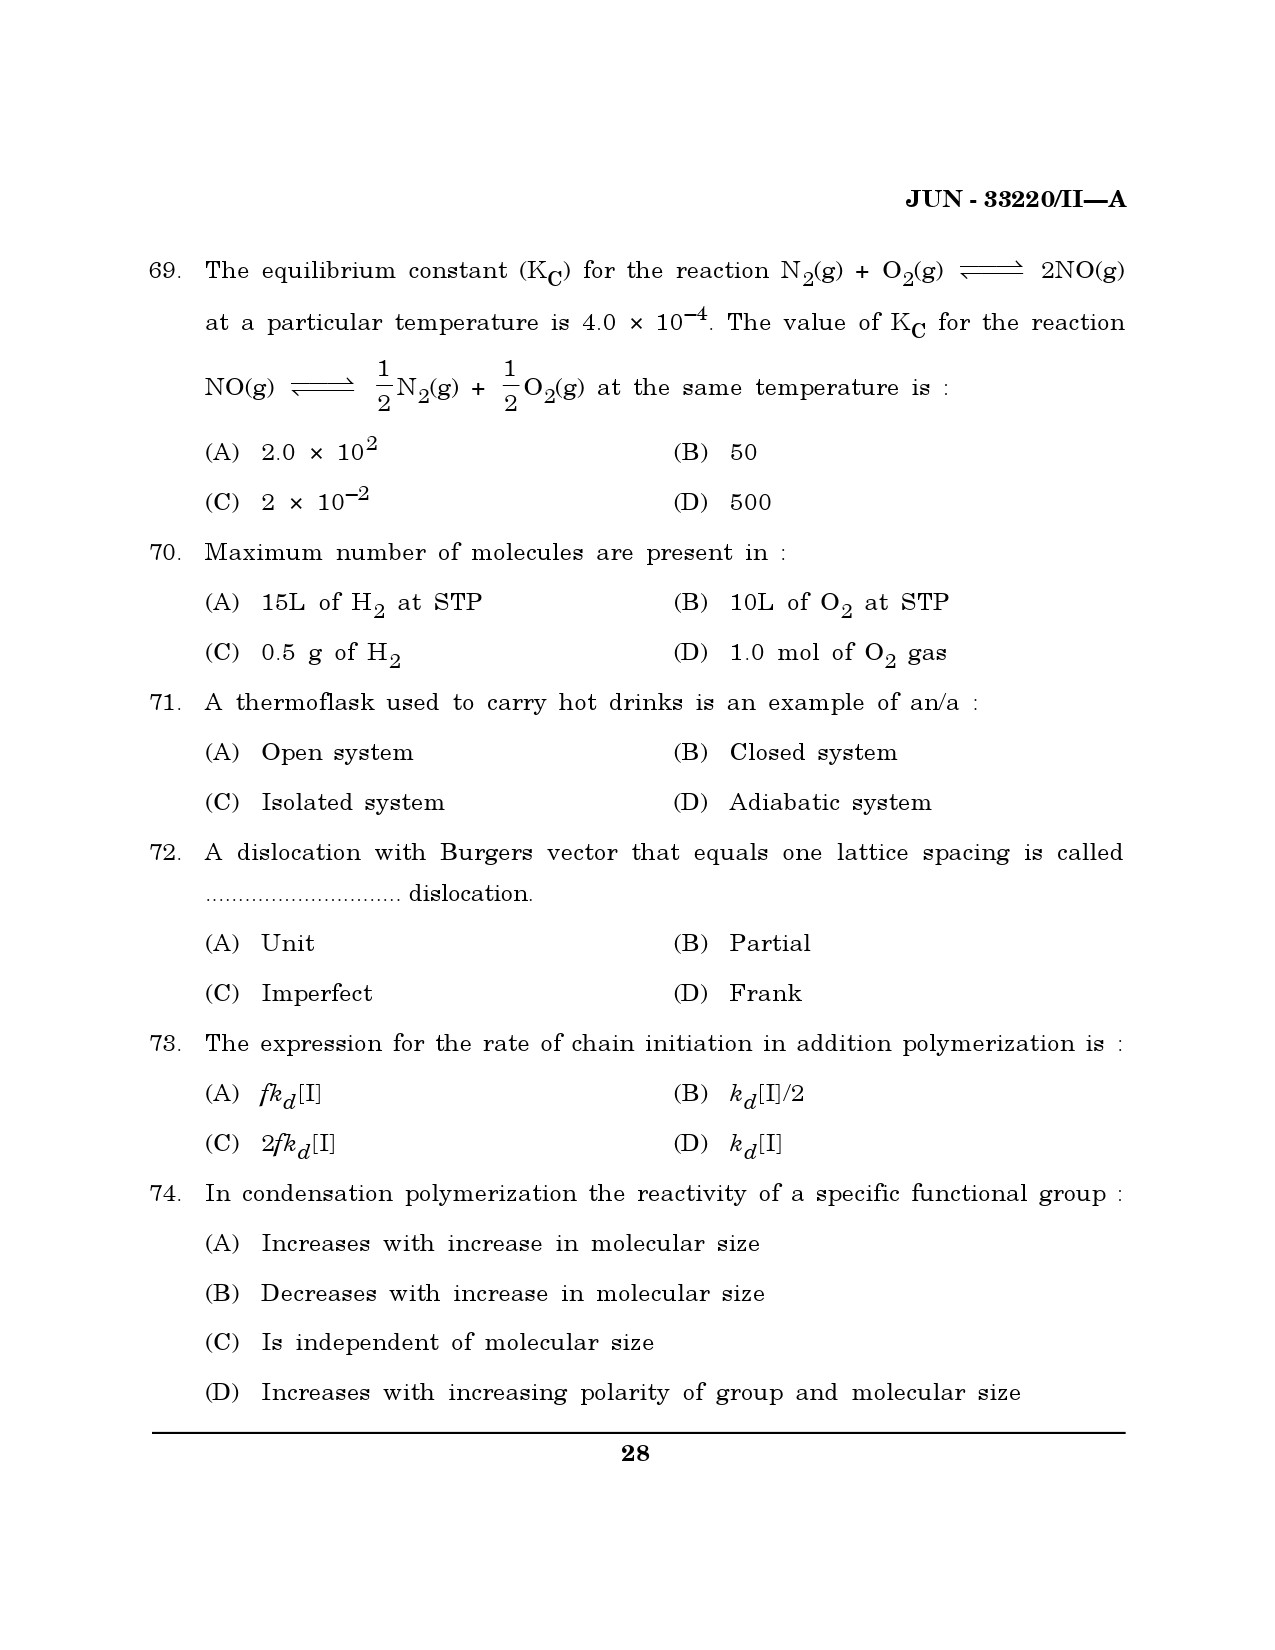 Maharashtra SET Chemical Sciences Question Paper II June 2020 27